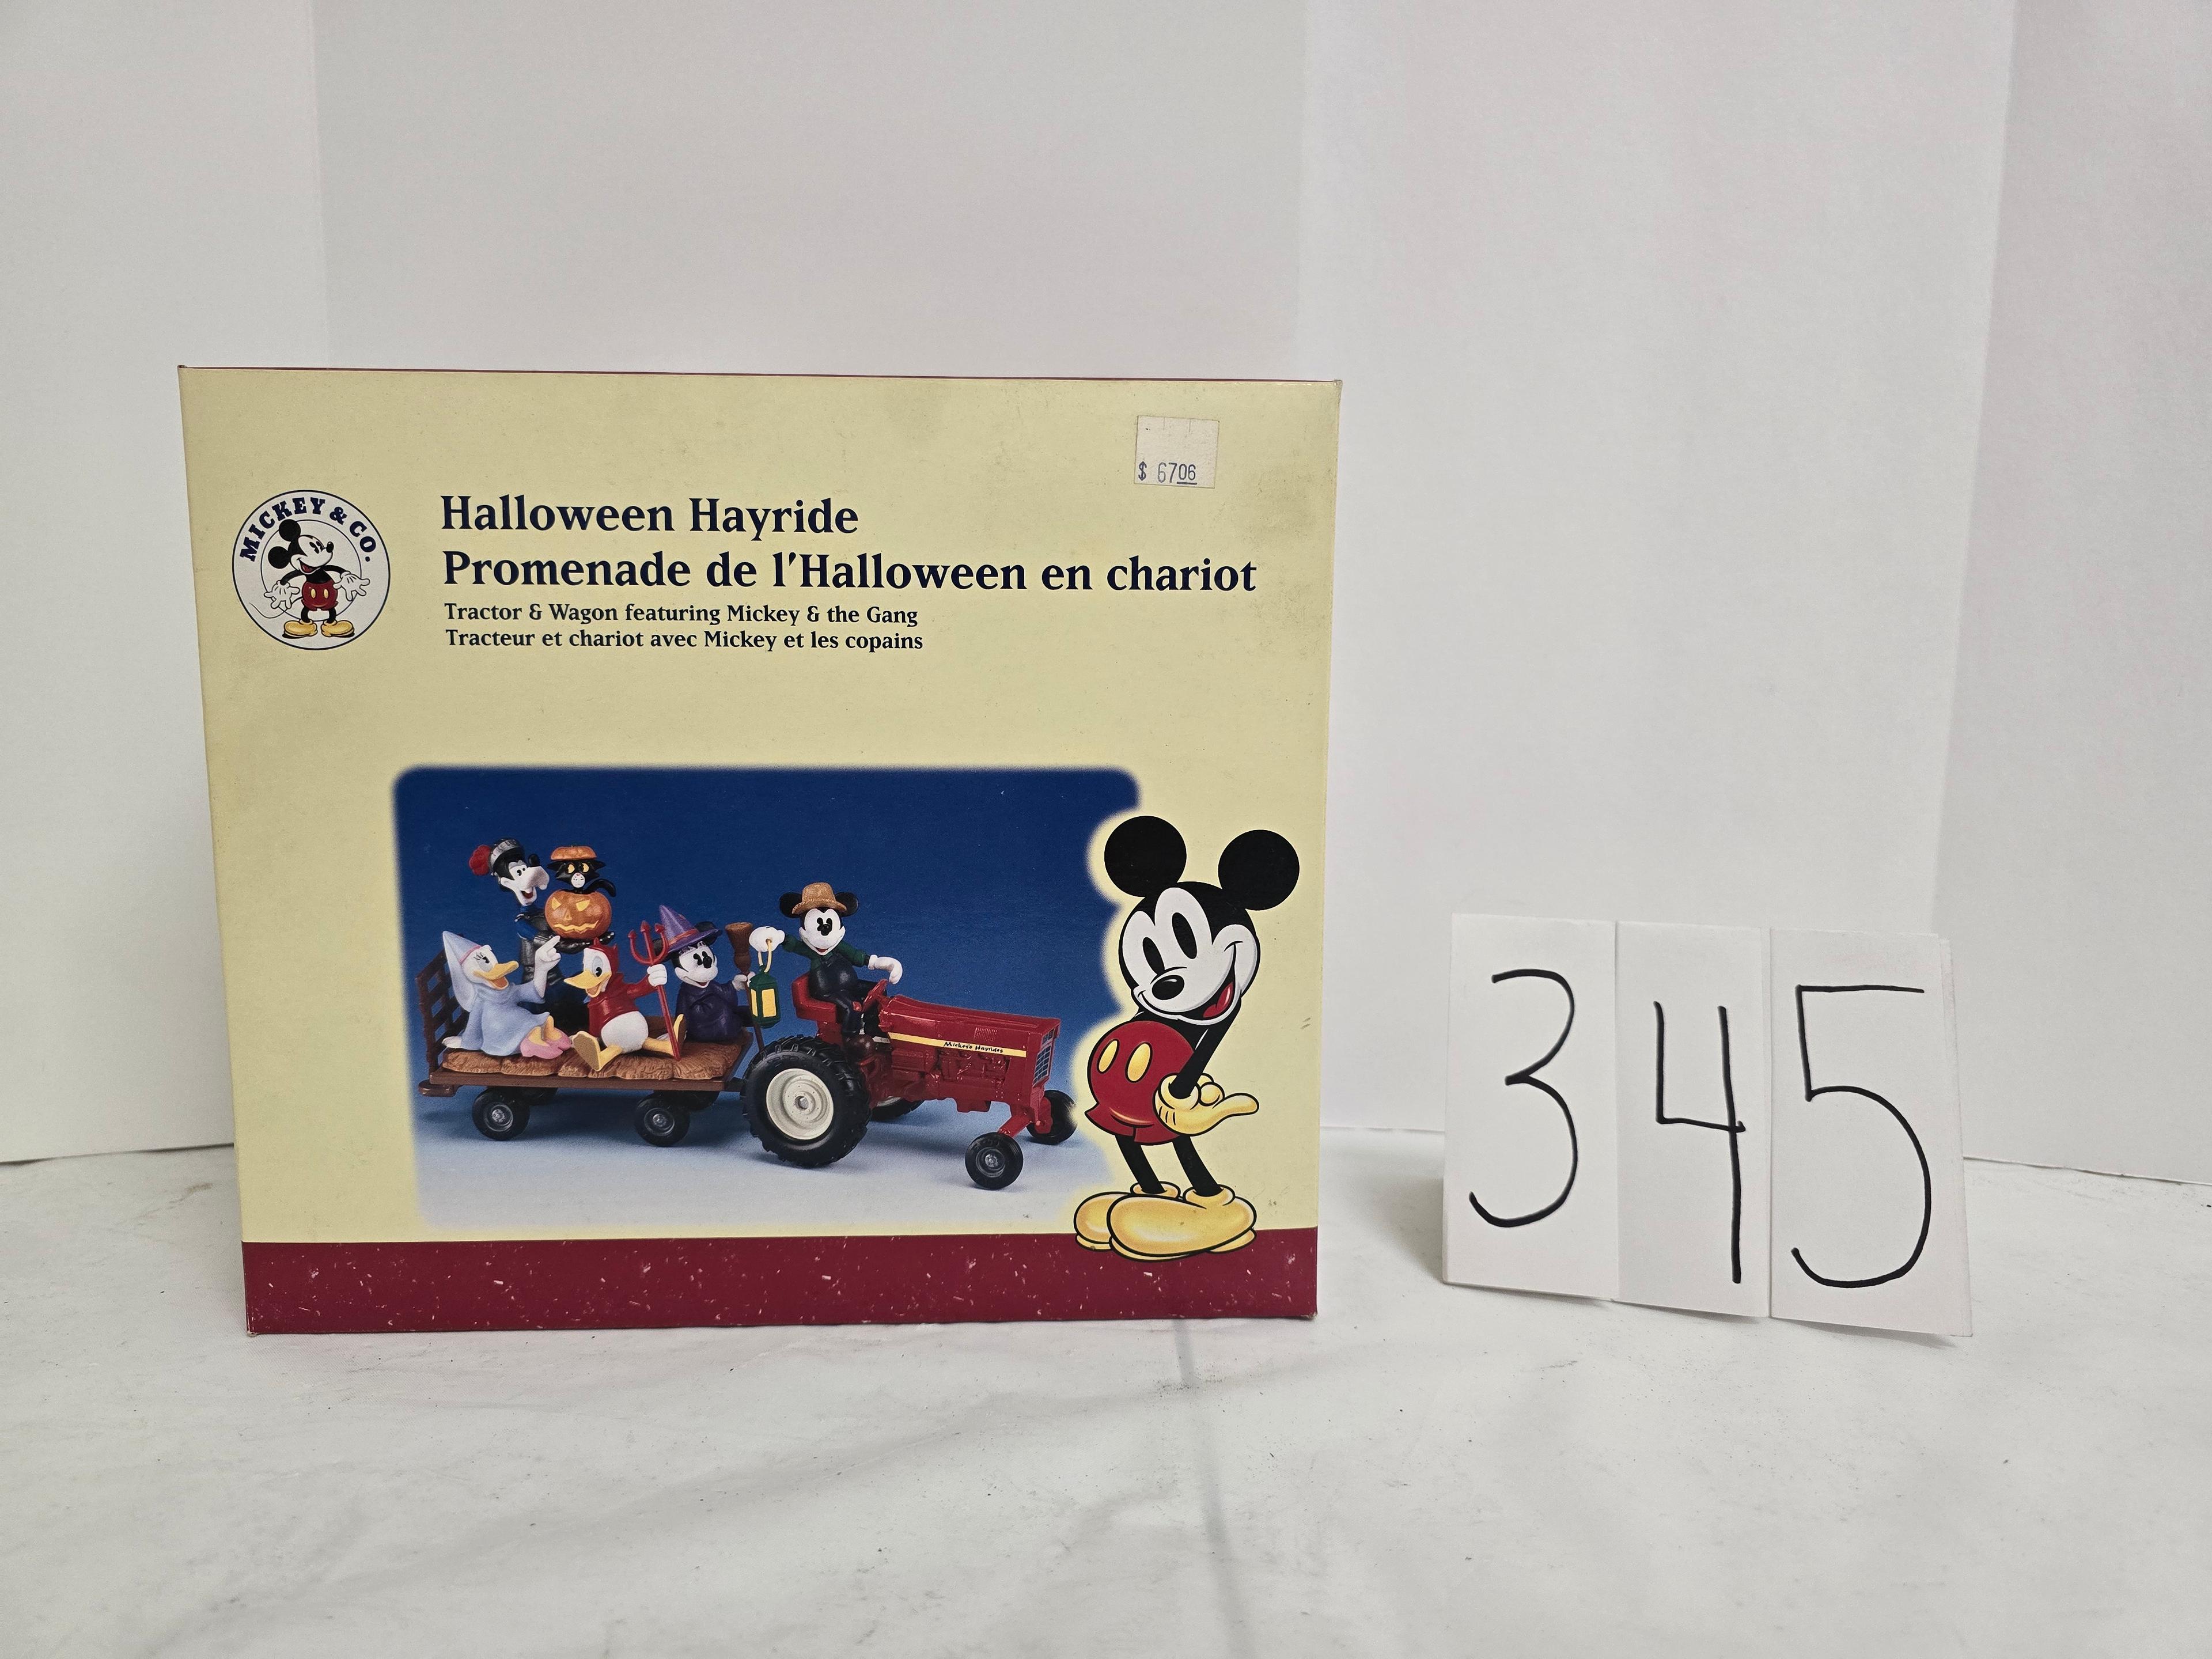 Ertl with Disney#19298 Mickey & Co. Halloween hayride featring IH tractor